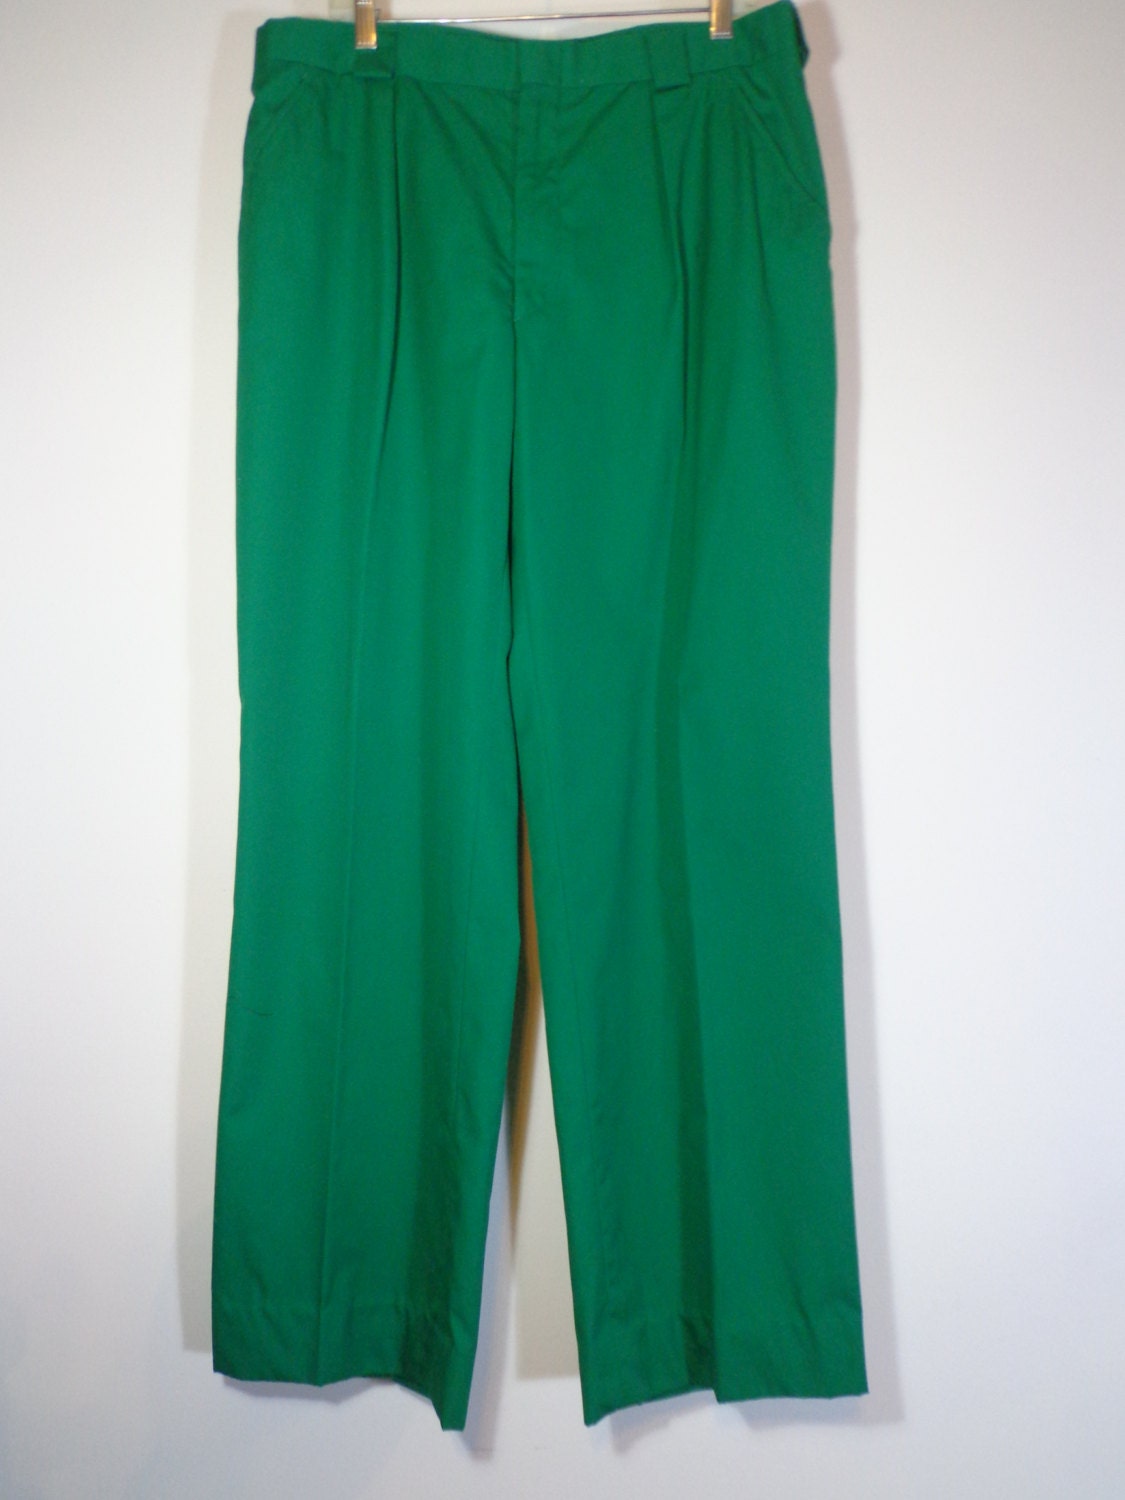 Solid Green True Vintage 80s Mens Golf Fashion Pants Retro